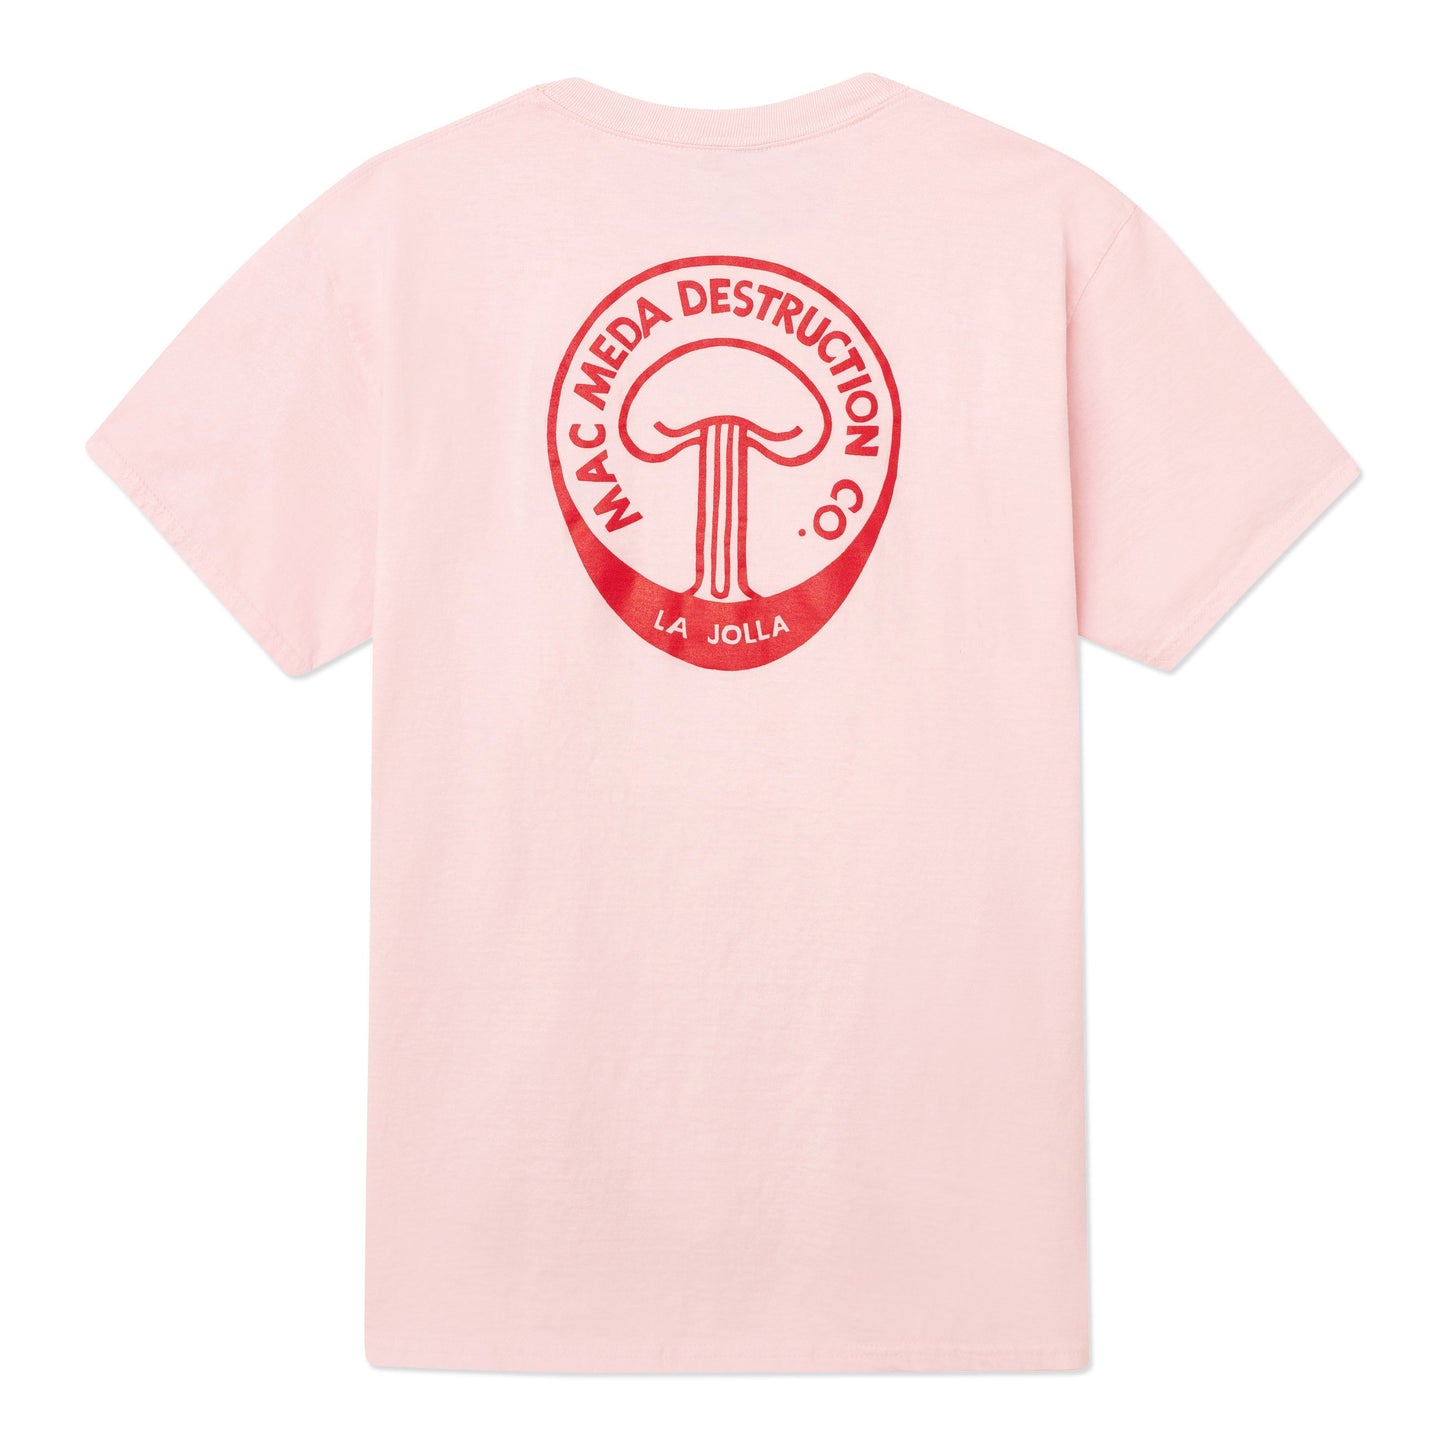 100% Cotton T-shirt (Mac Meda Mushroom Cloud Tee - Pink)